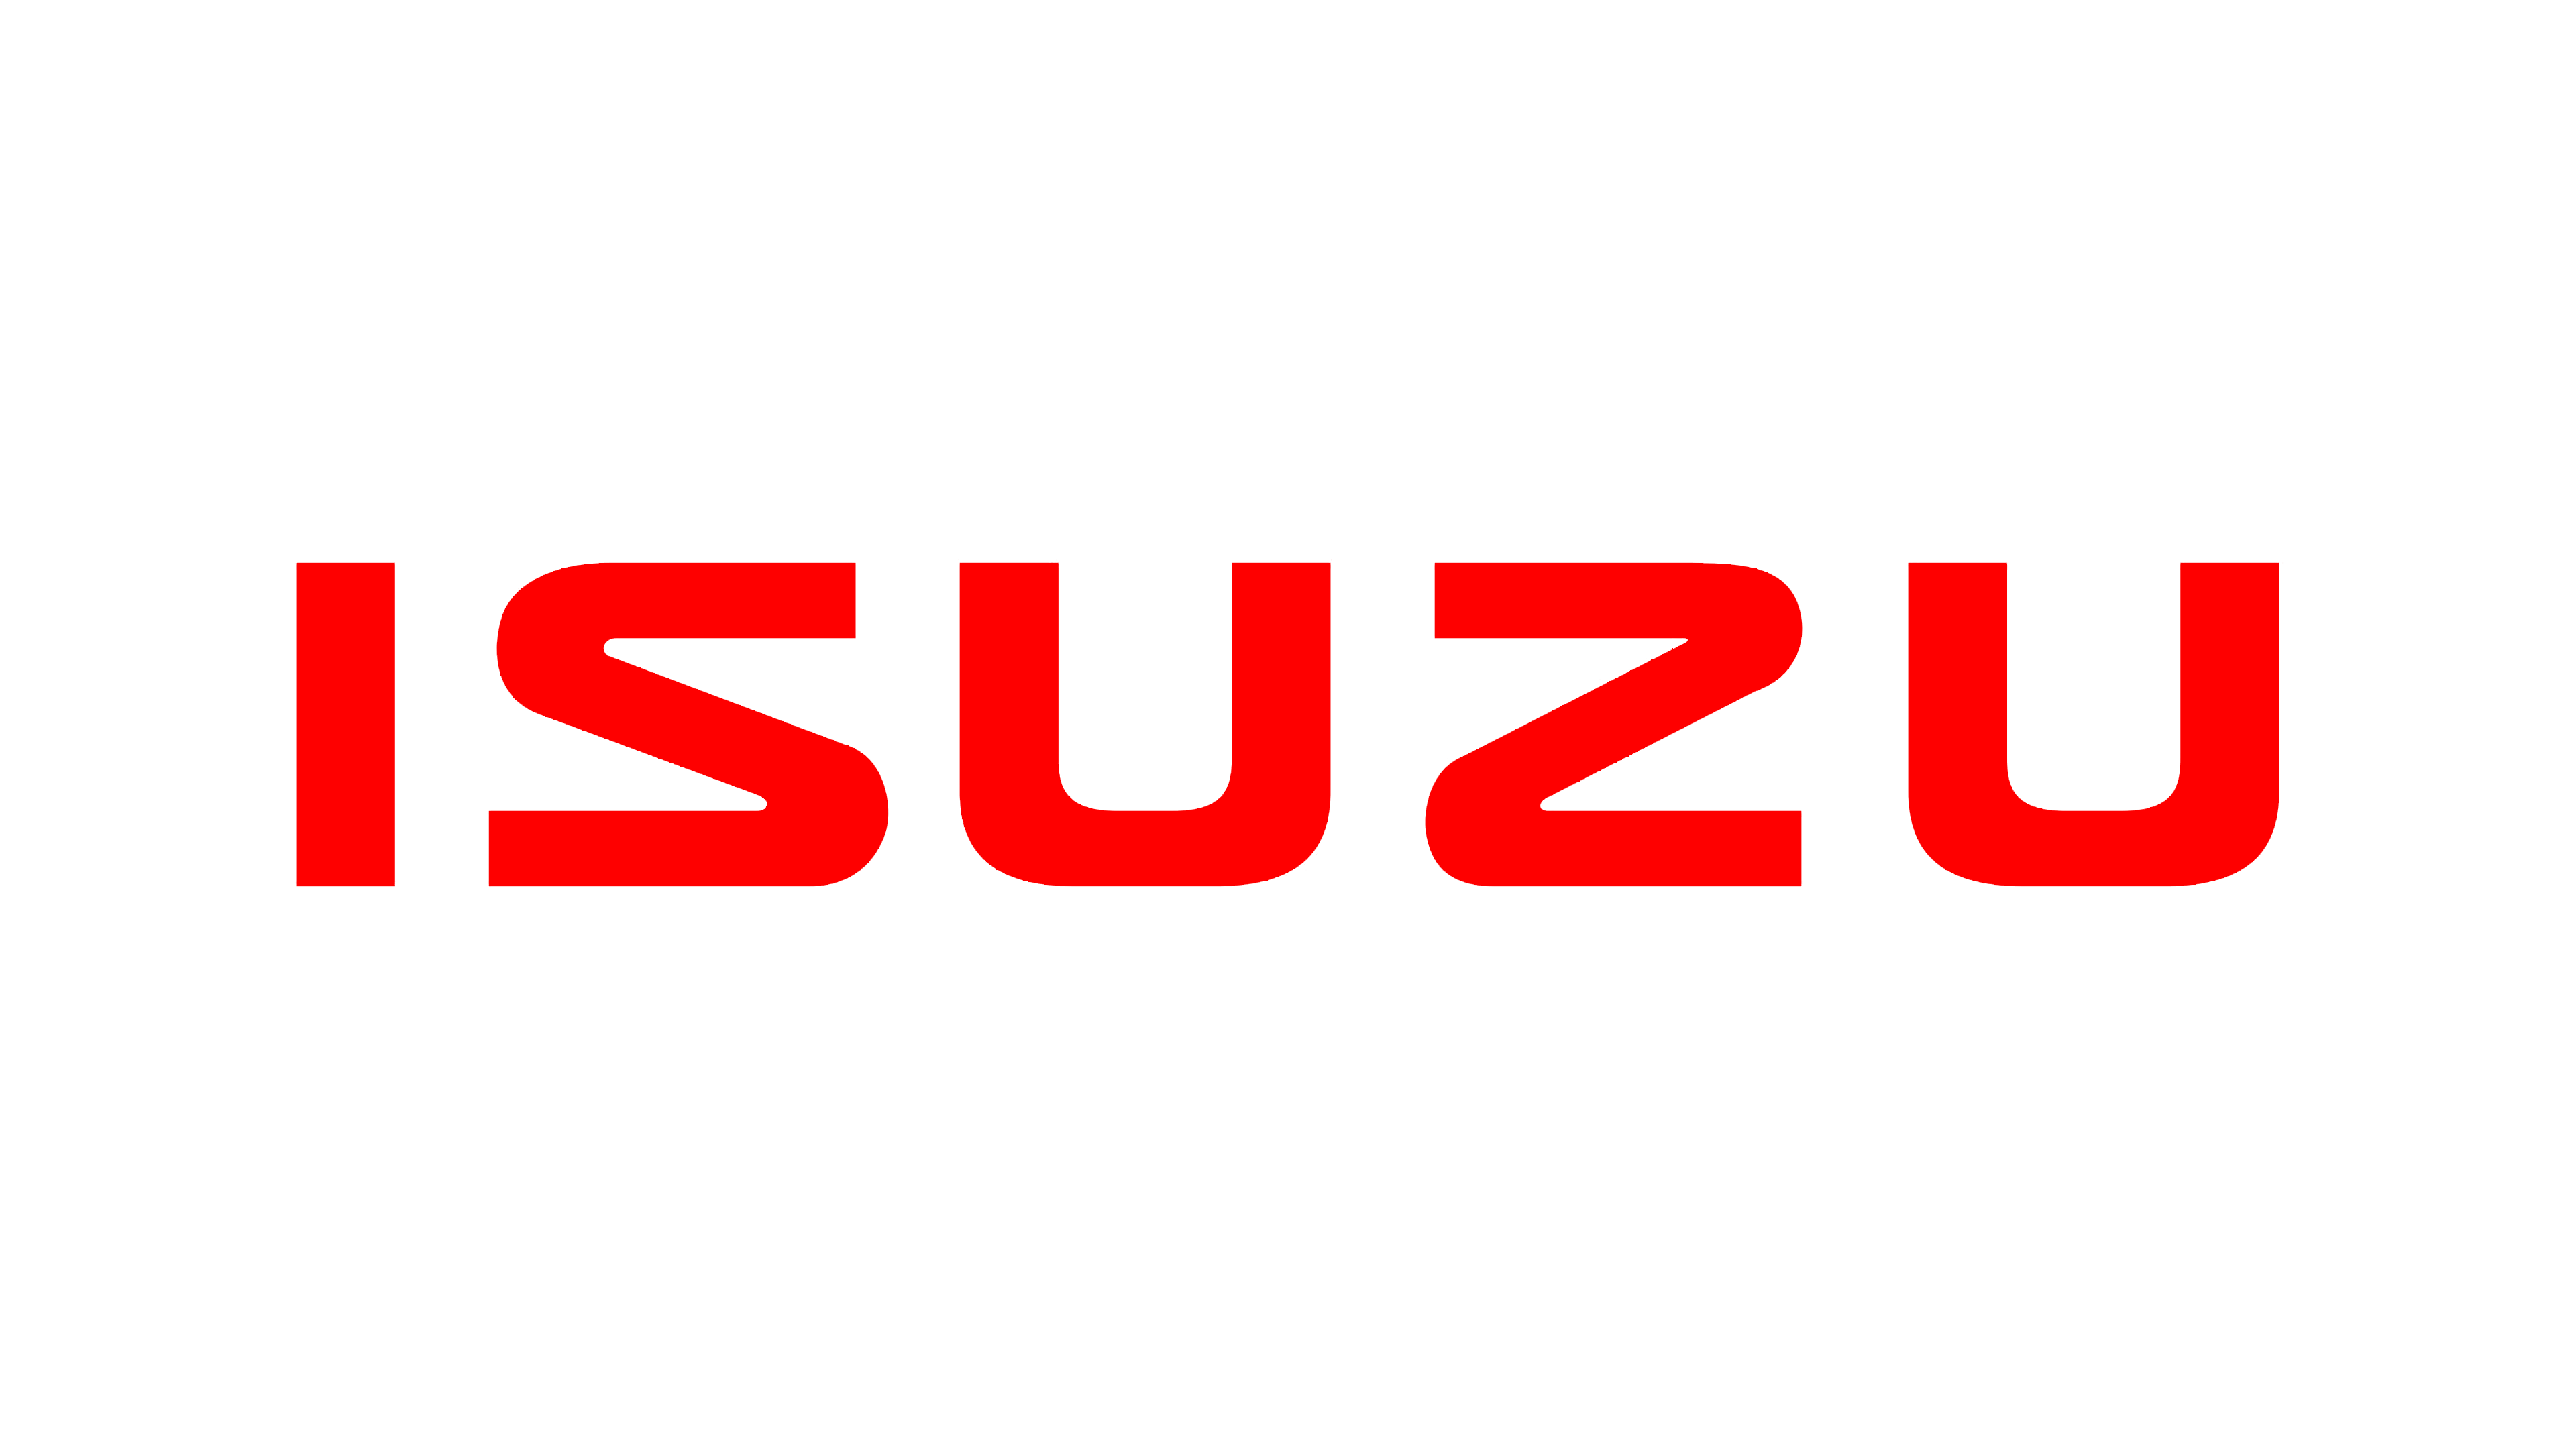 Logotipo Isuzu PNG